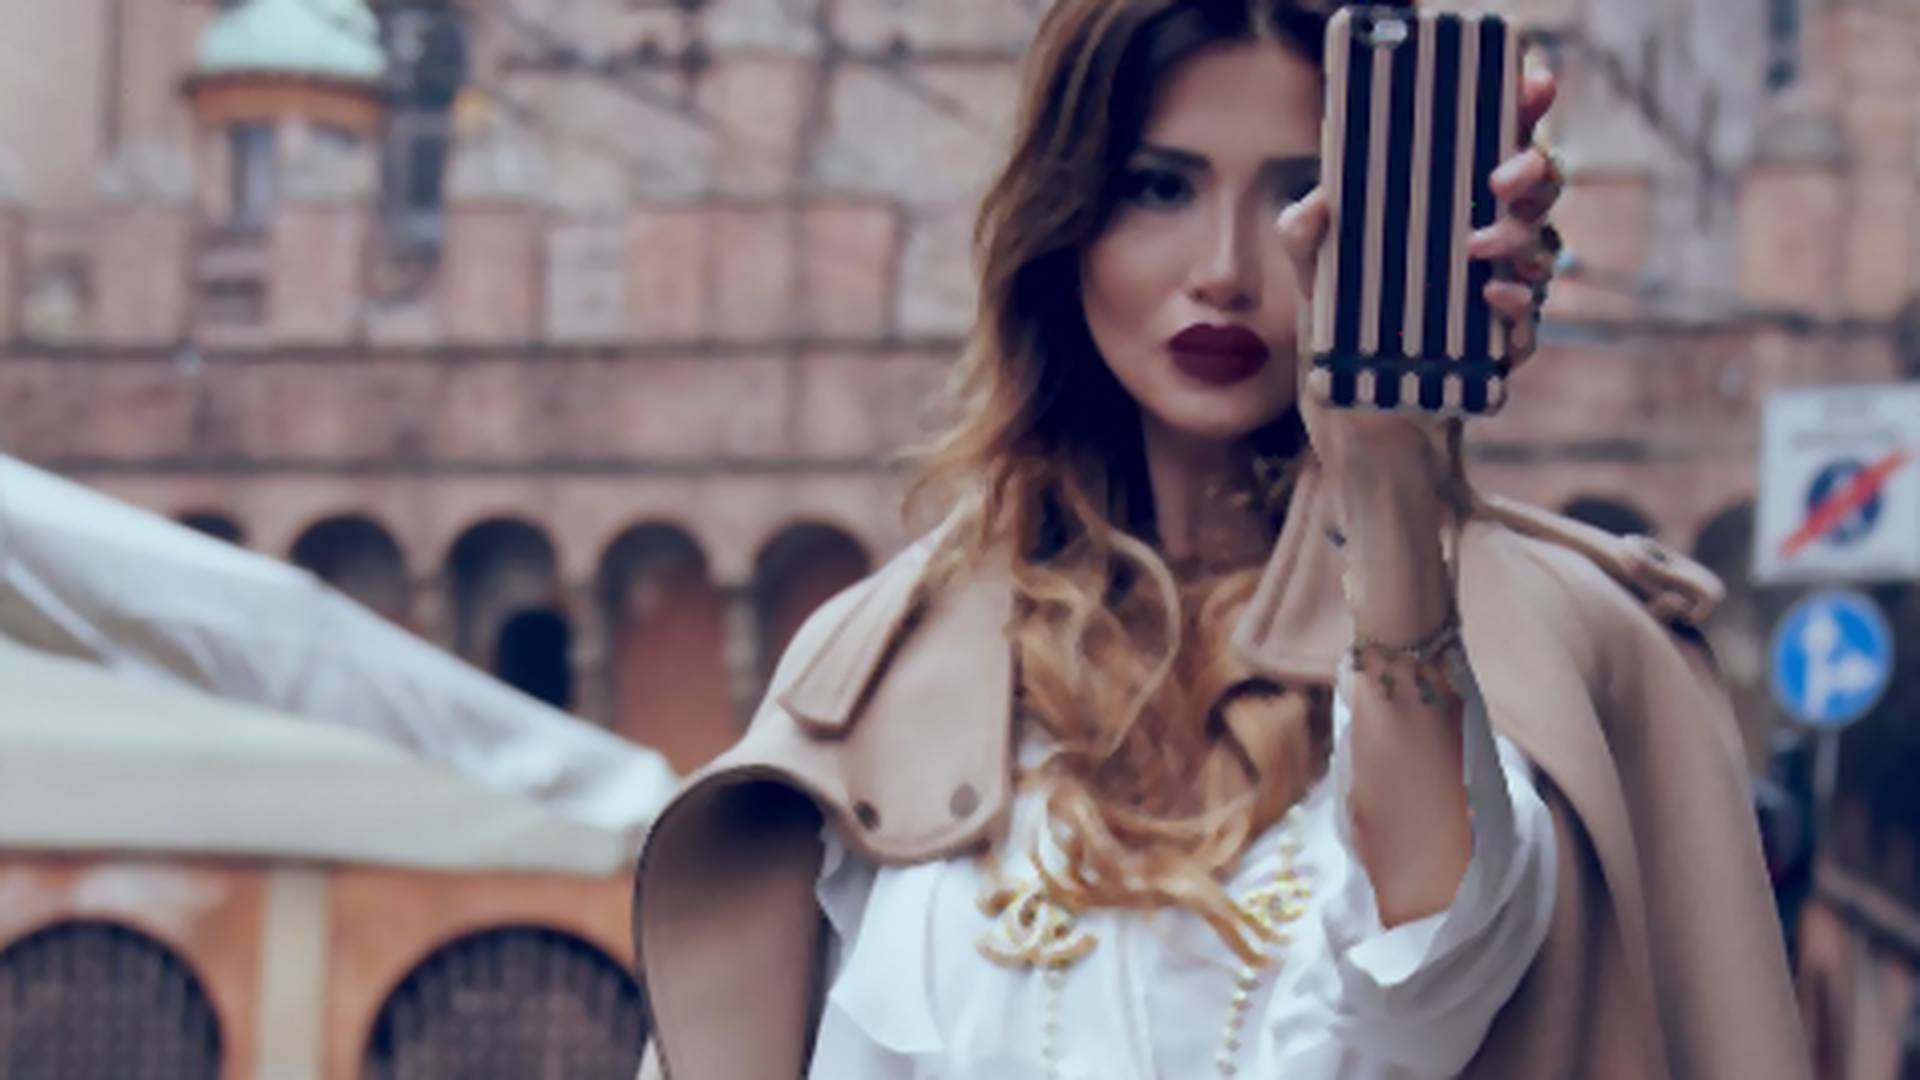 Baka iz Srbije postala svetska modna atrakcija